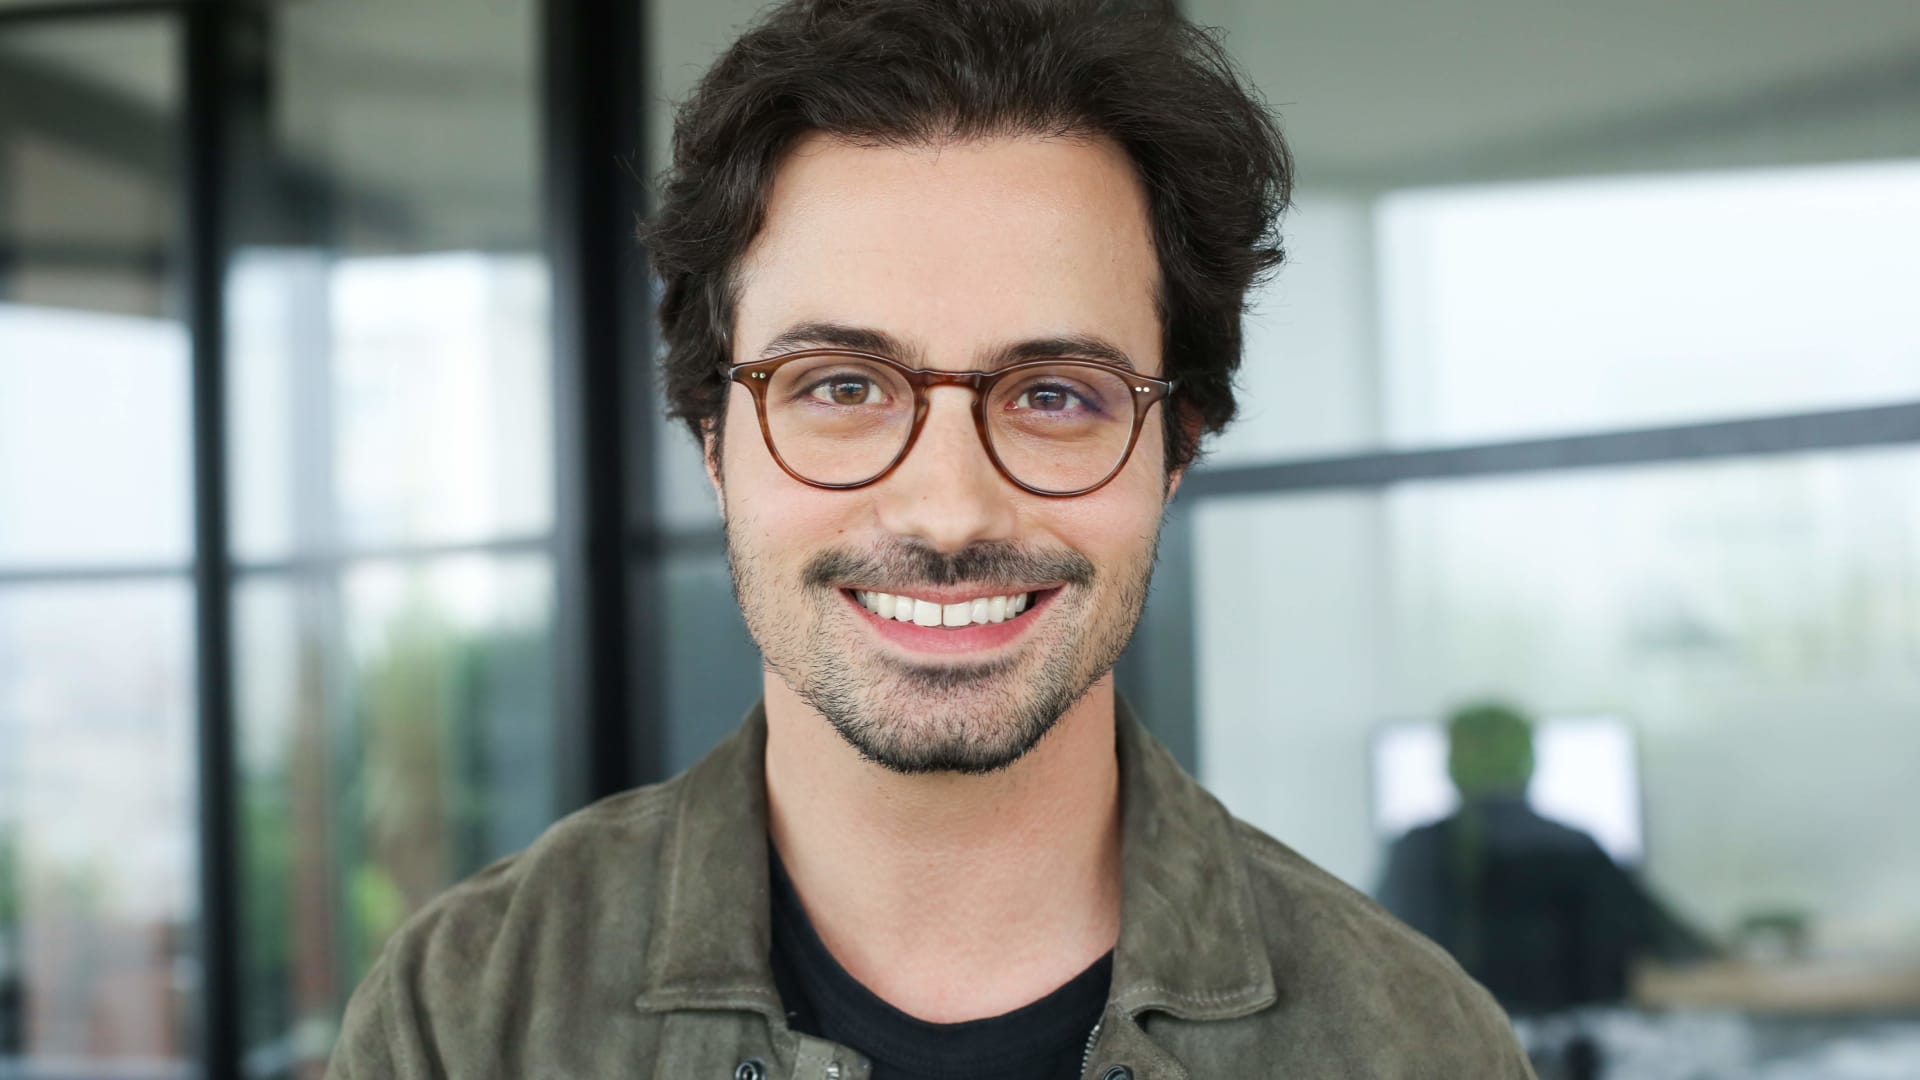 Virtuo CEO Karim Kaddoura